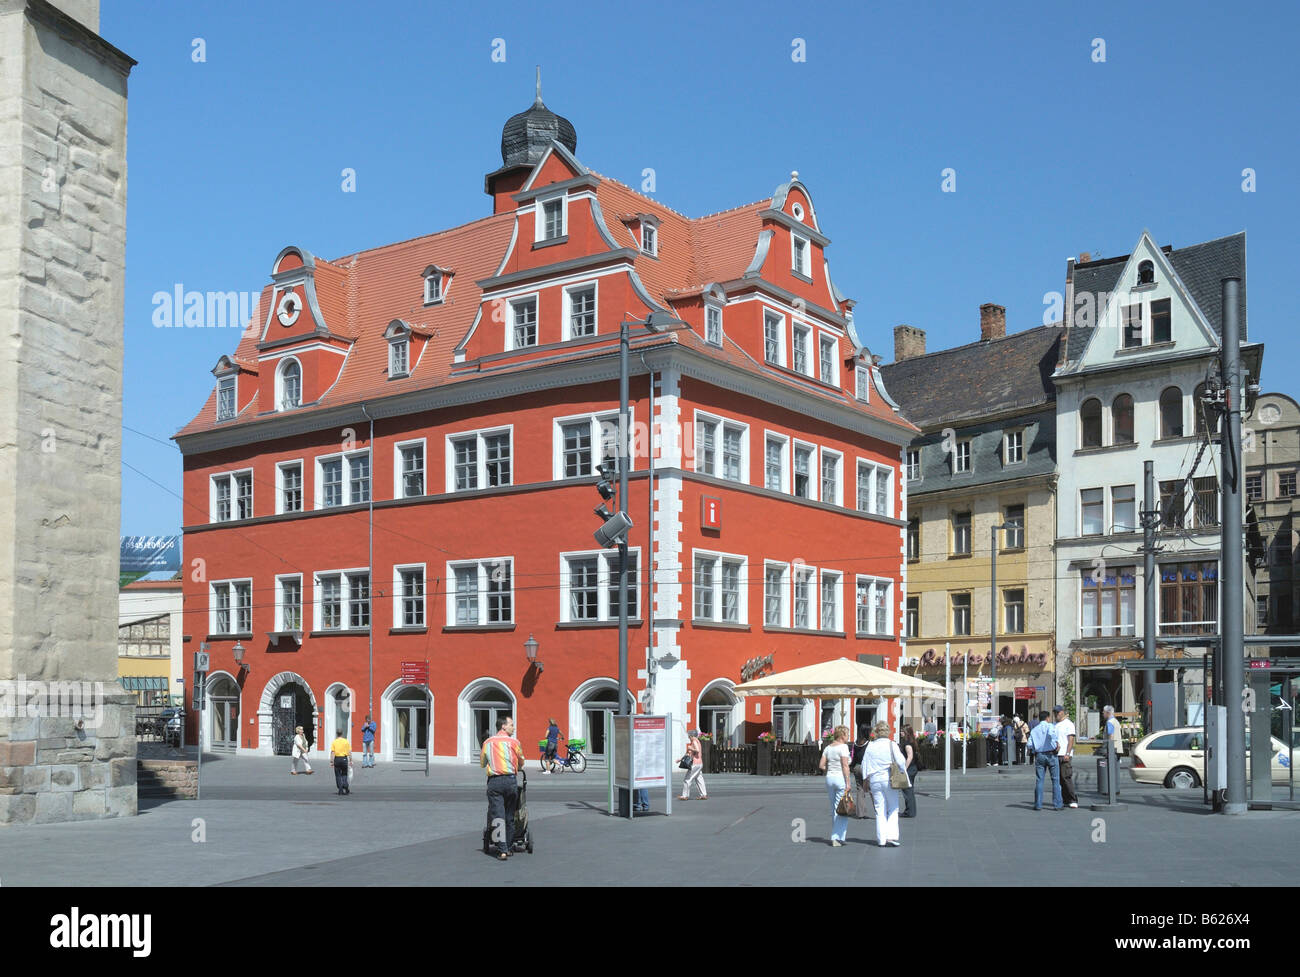 Building containing tourist information about Halle, Marktplatz Square, Halle/Saale, Saxony-Anhalt, Germany, Europe Stock Photo